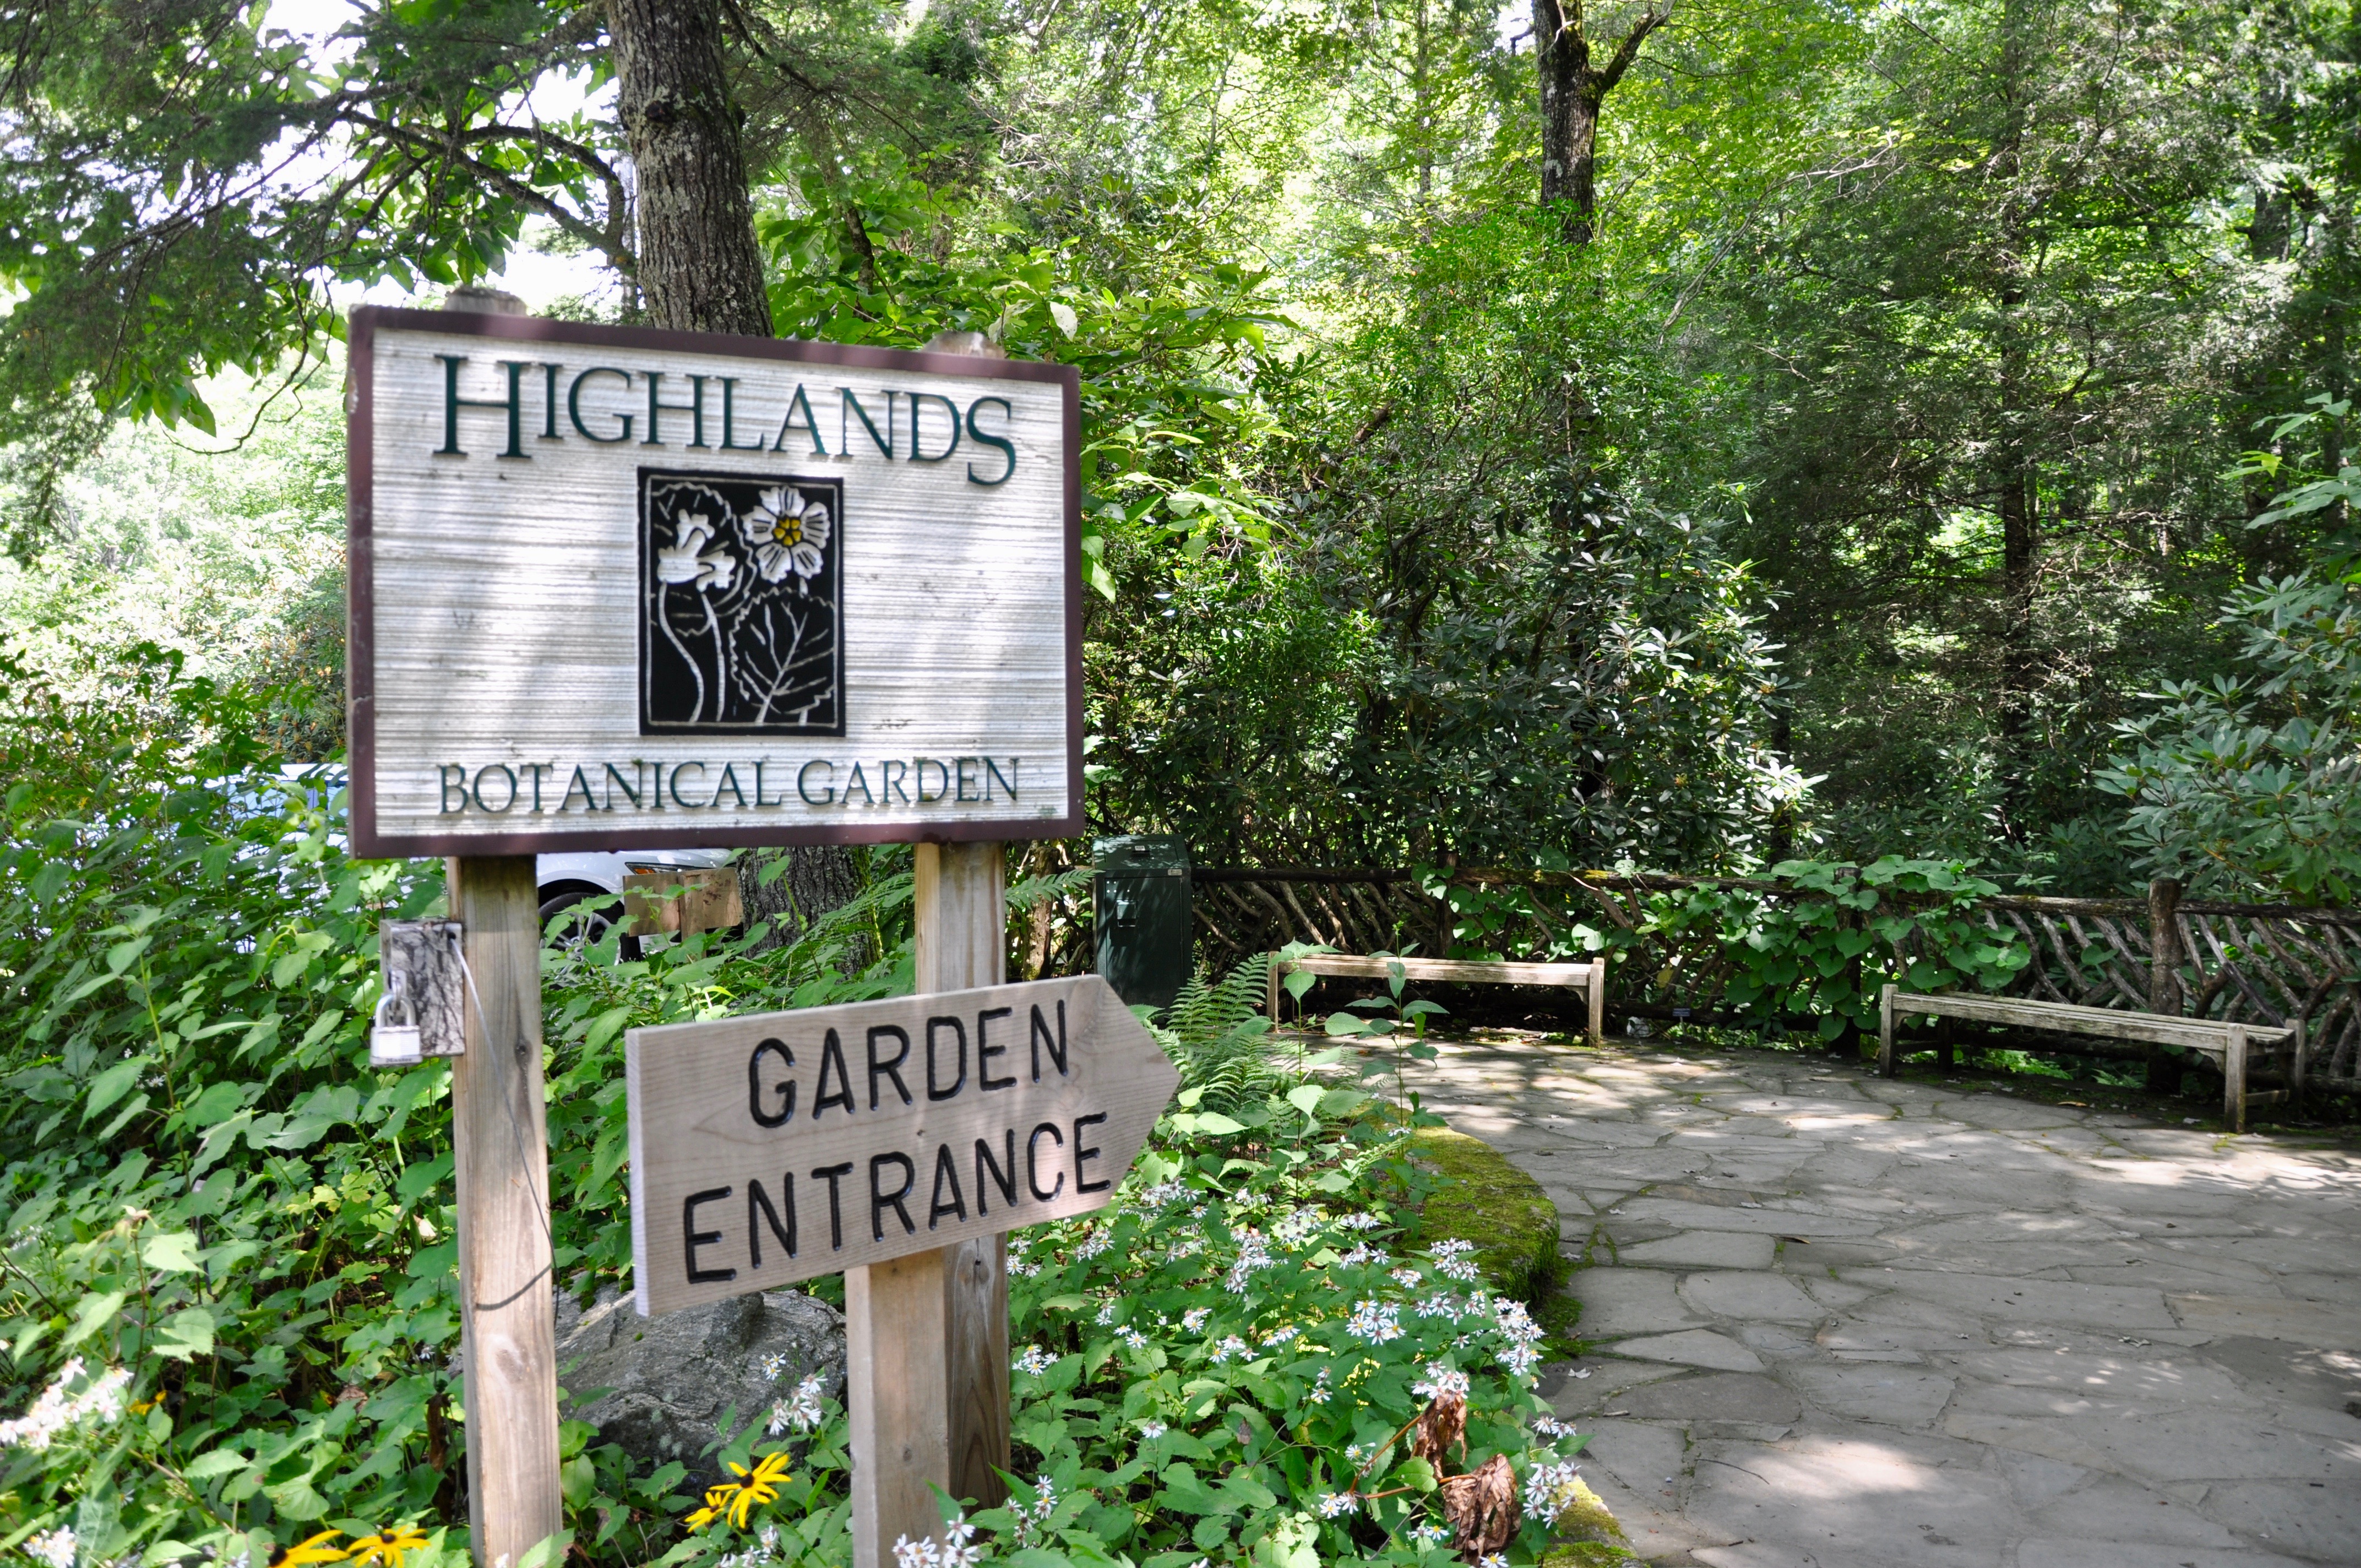 HIghlands Nature Center and entrance to Botanical Garden